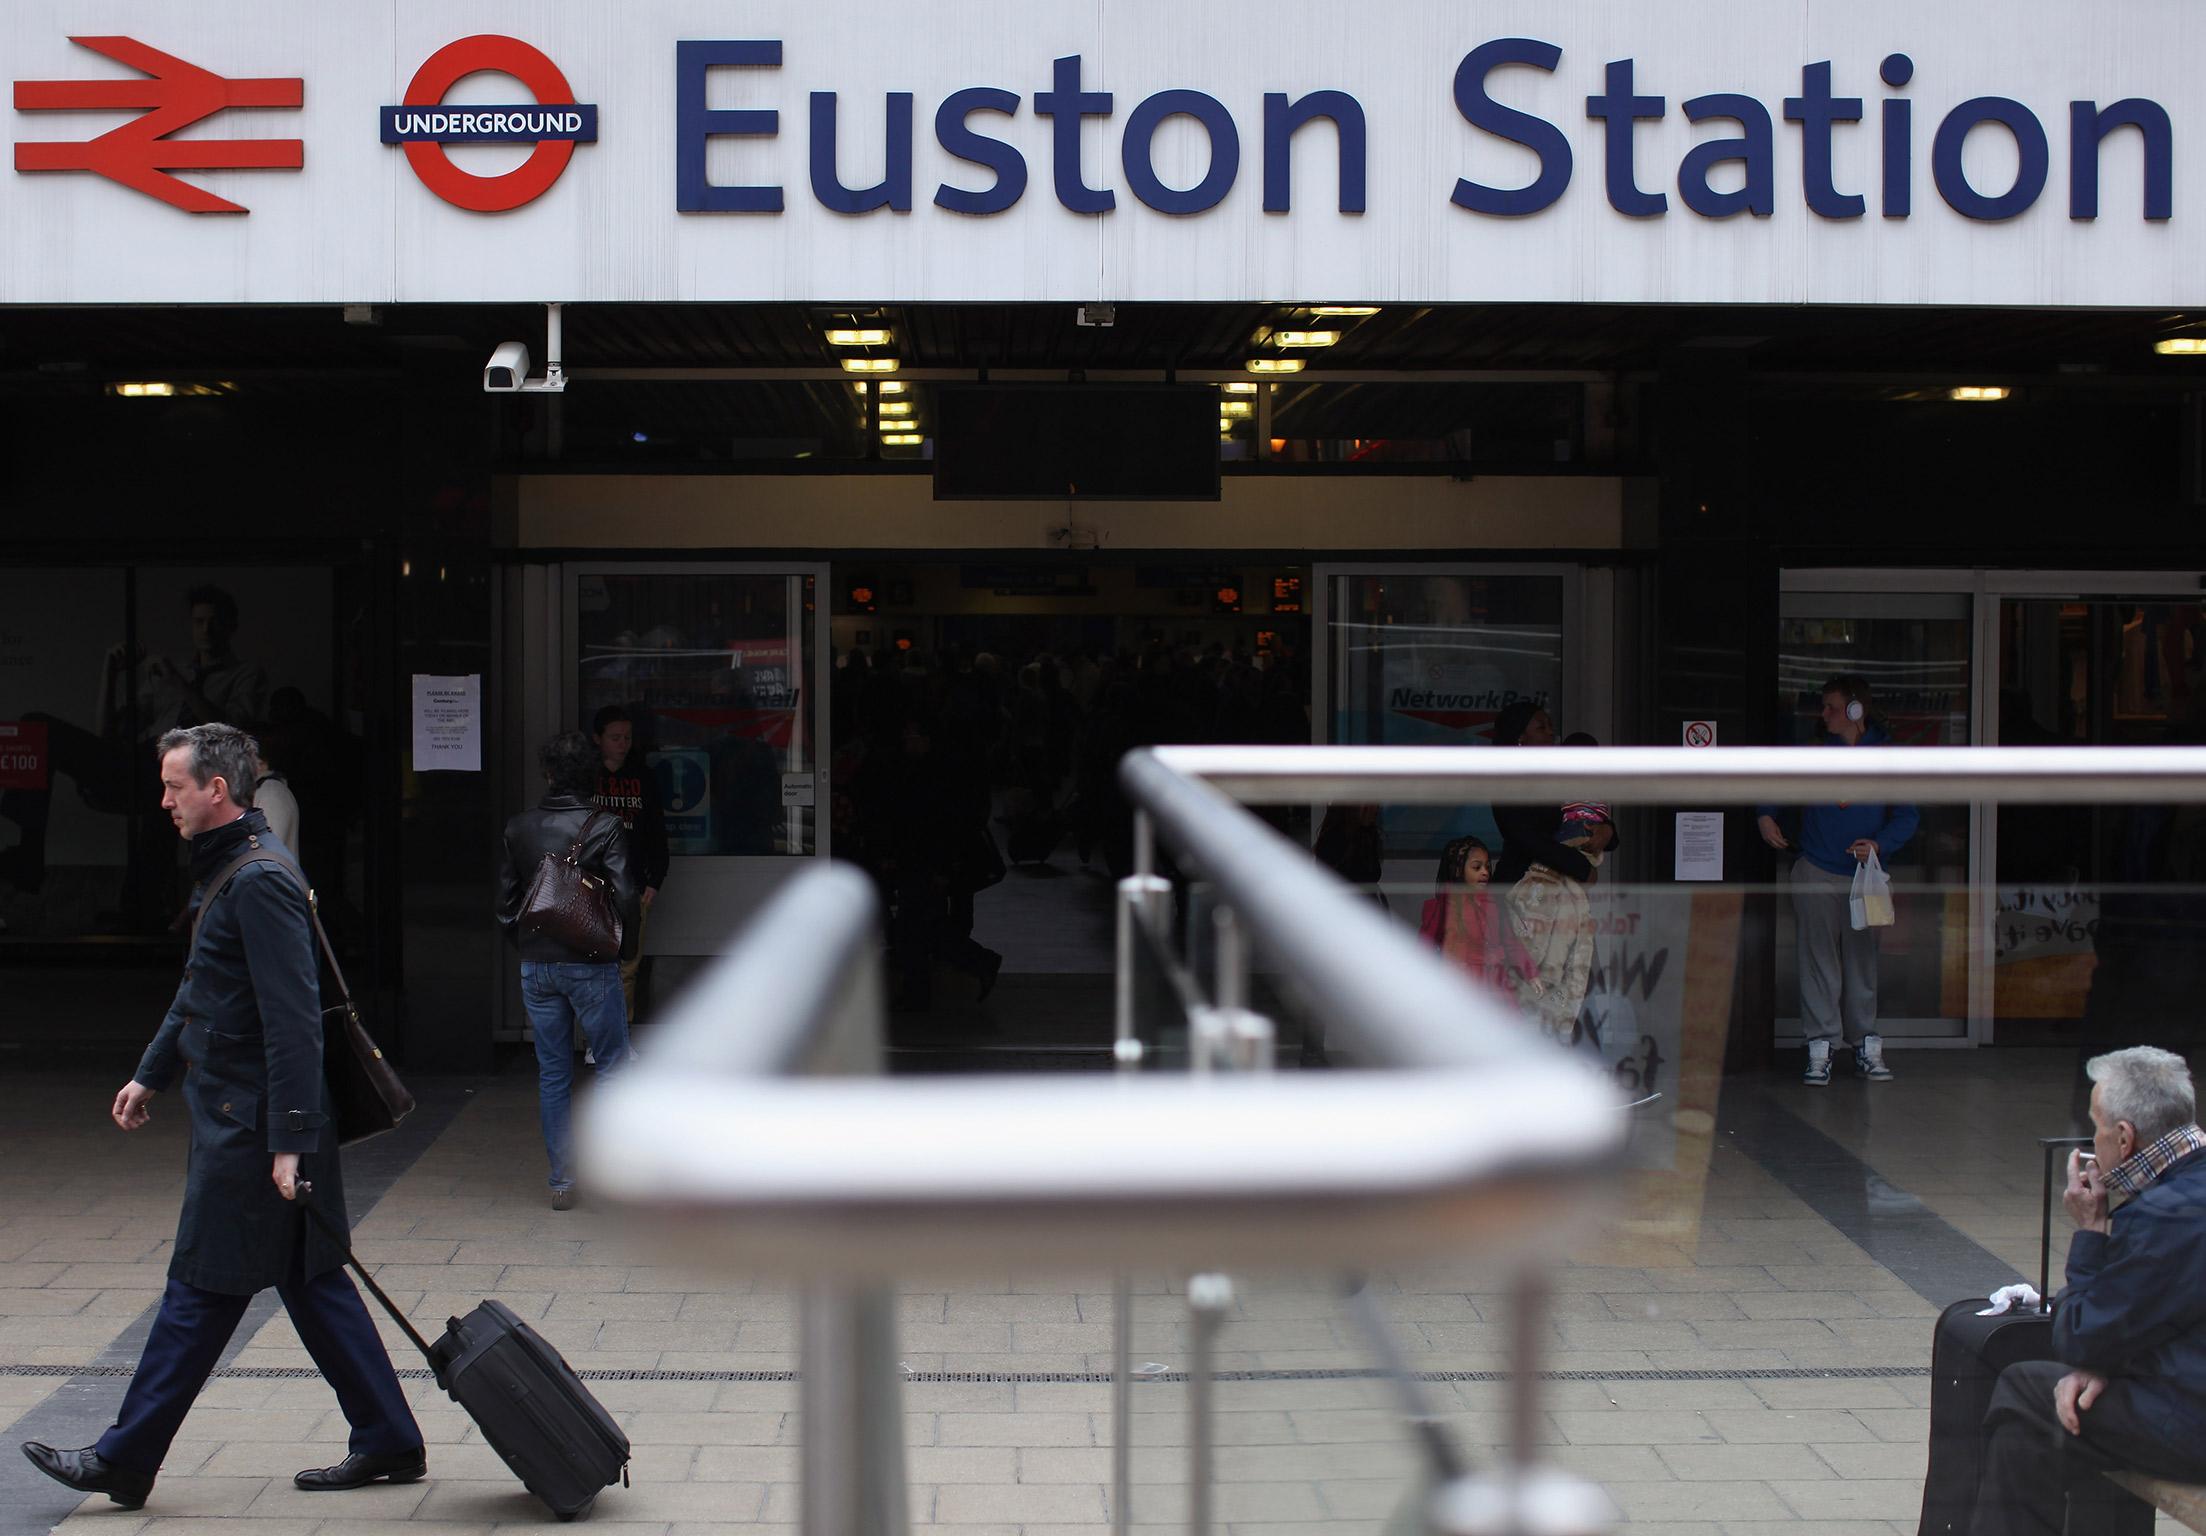 News follows similar evacuations at Heathrow Airport and London Bridge Station